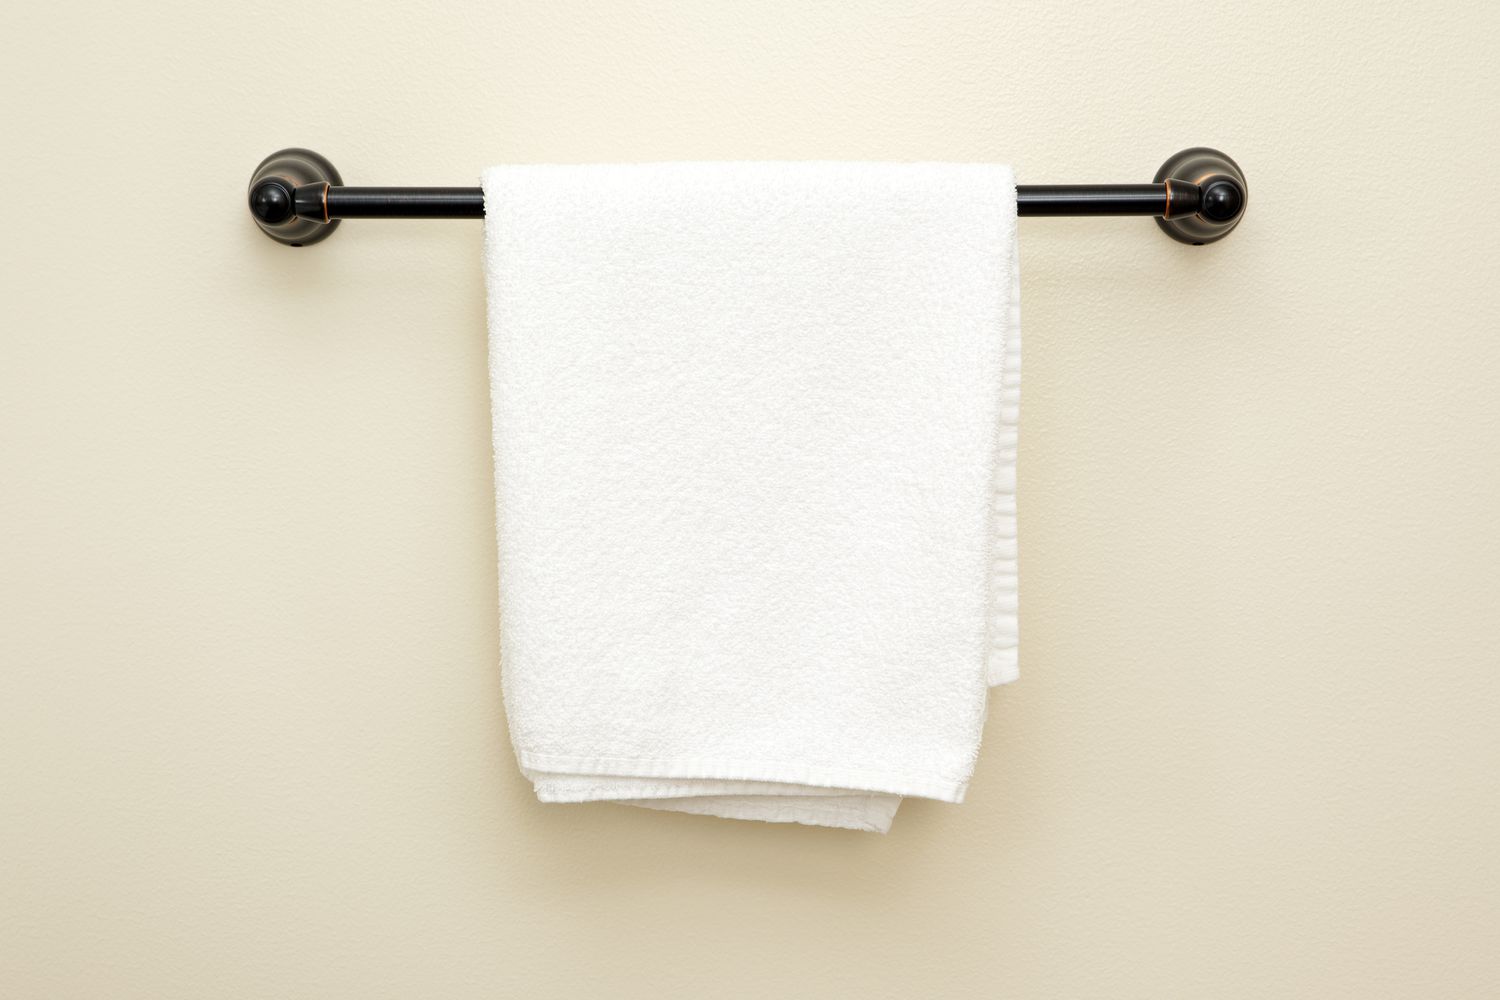 towel bar